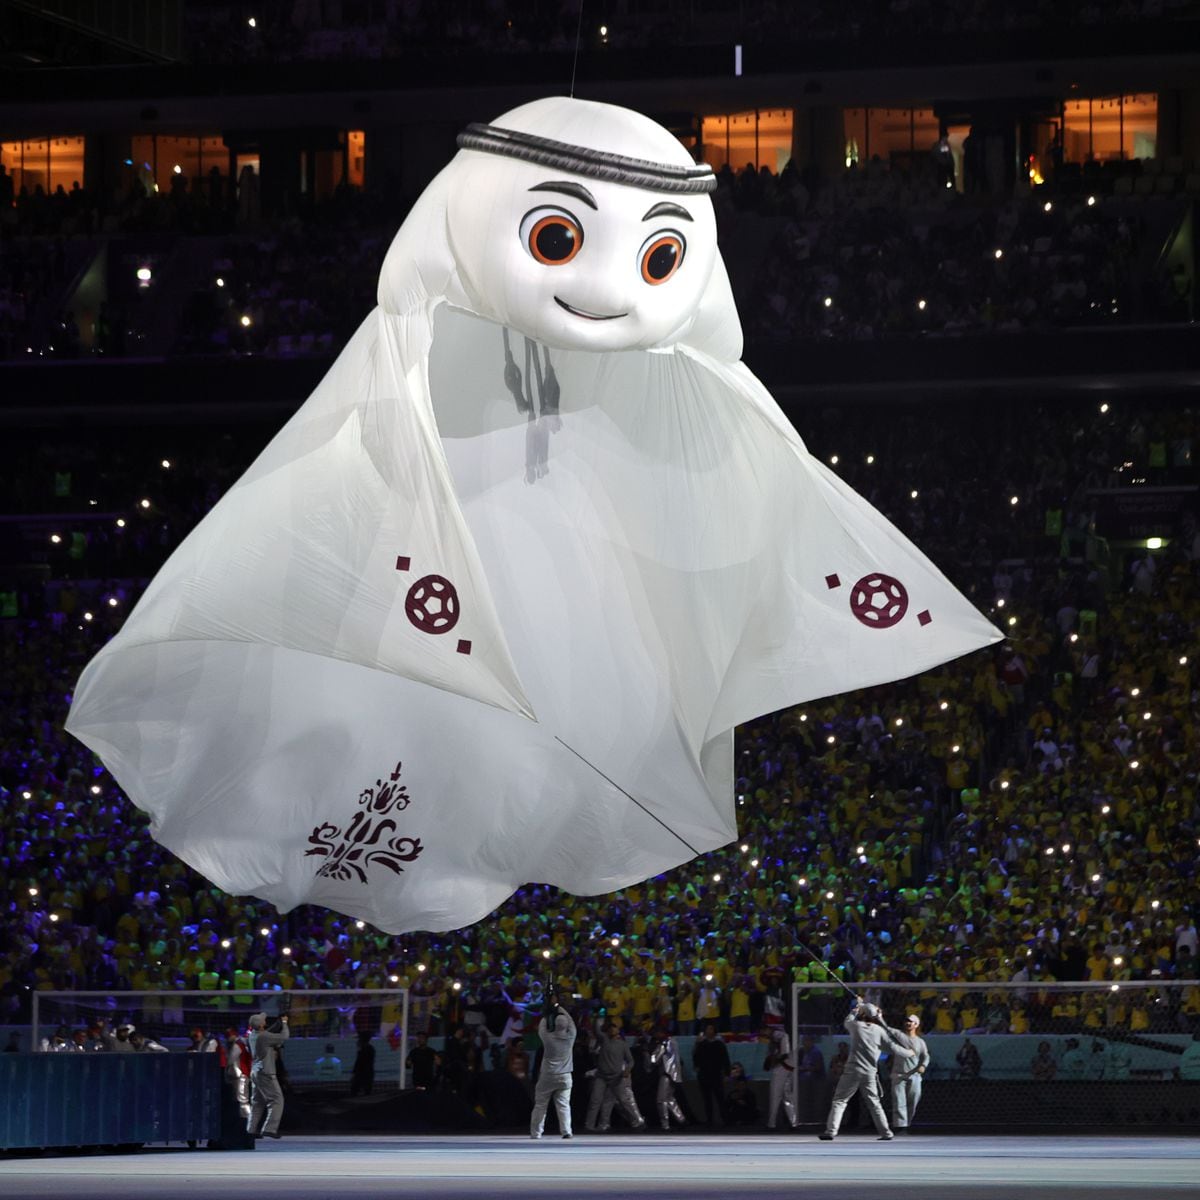 qatar world cup mascot